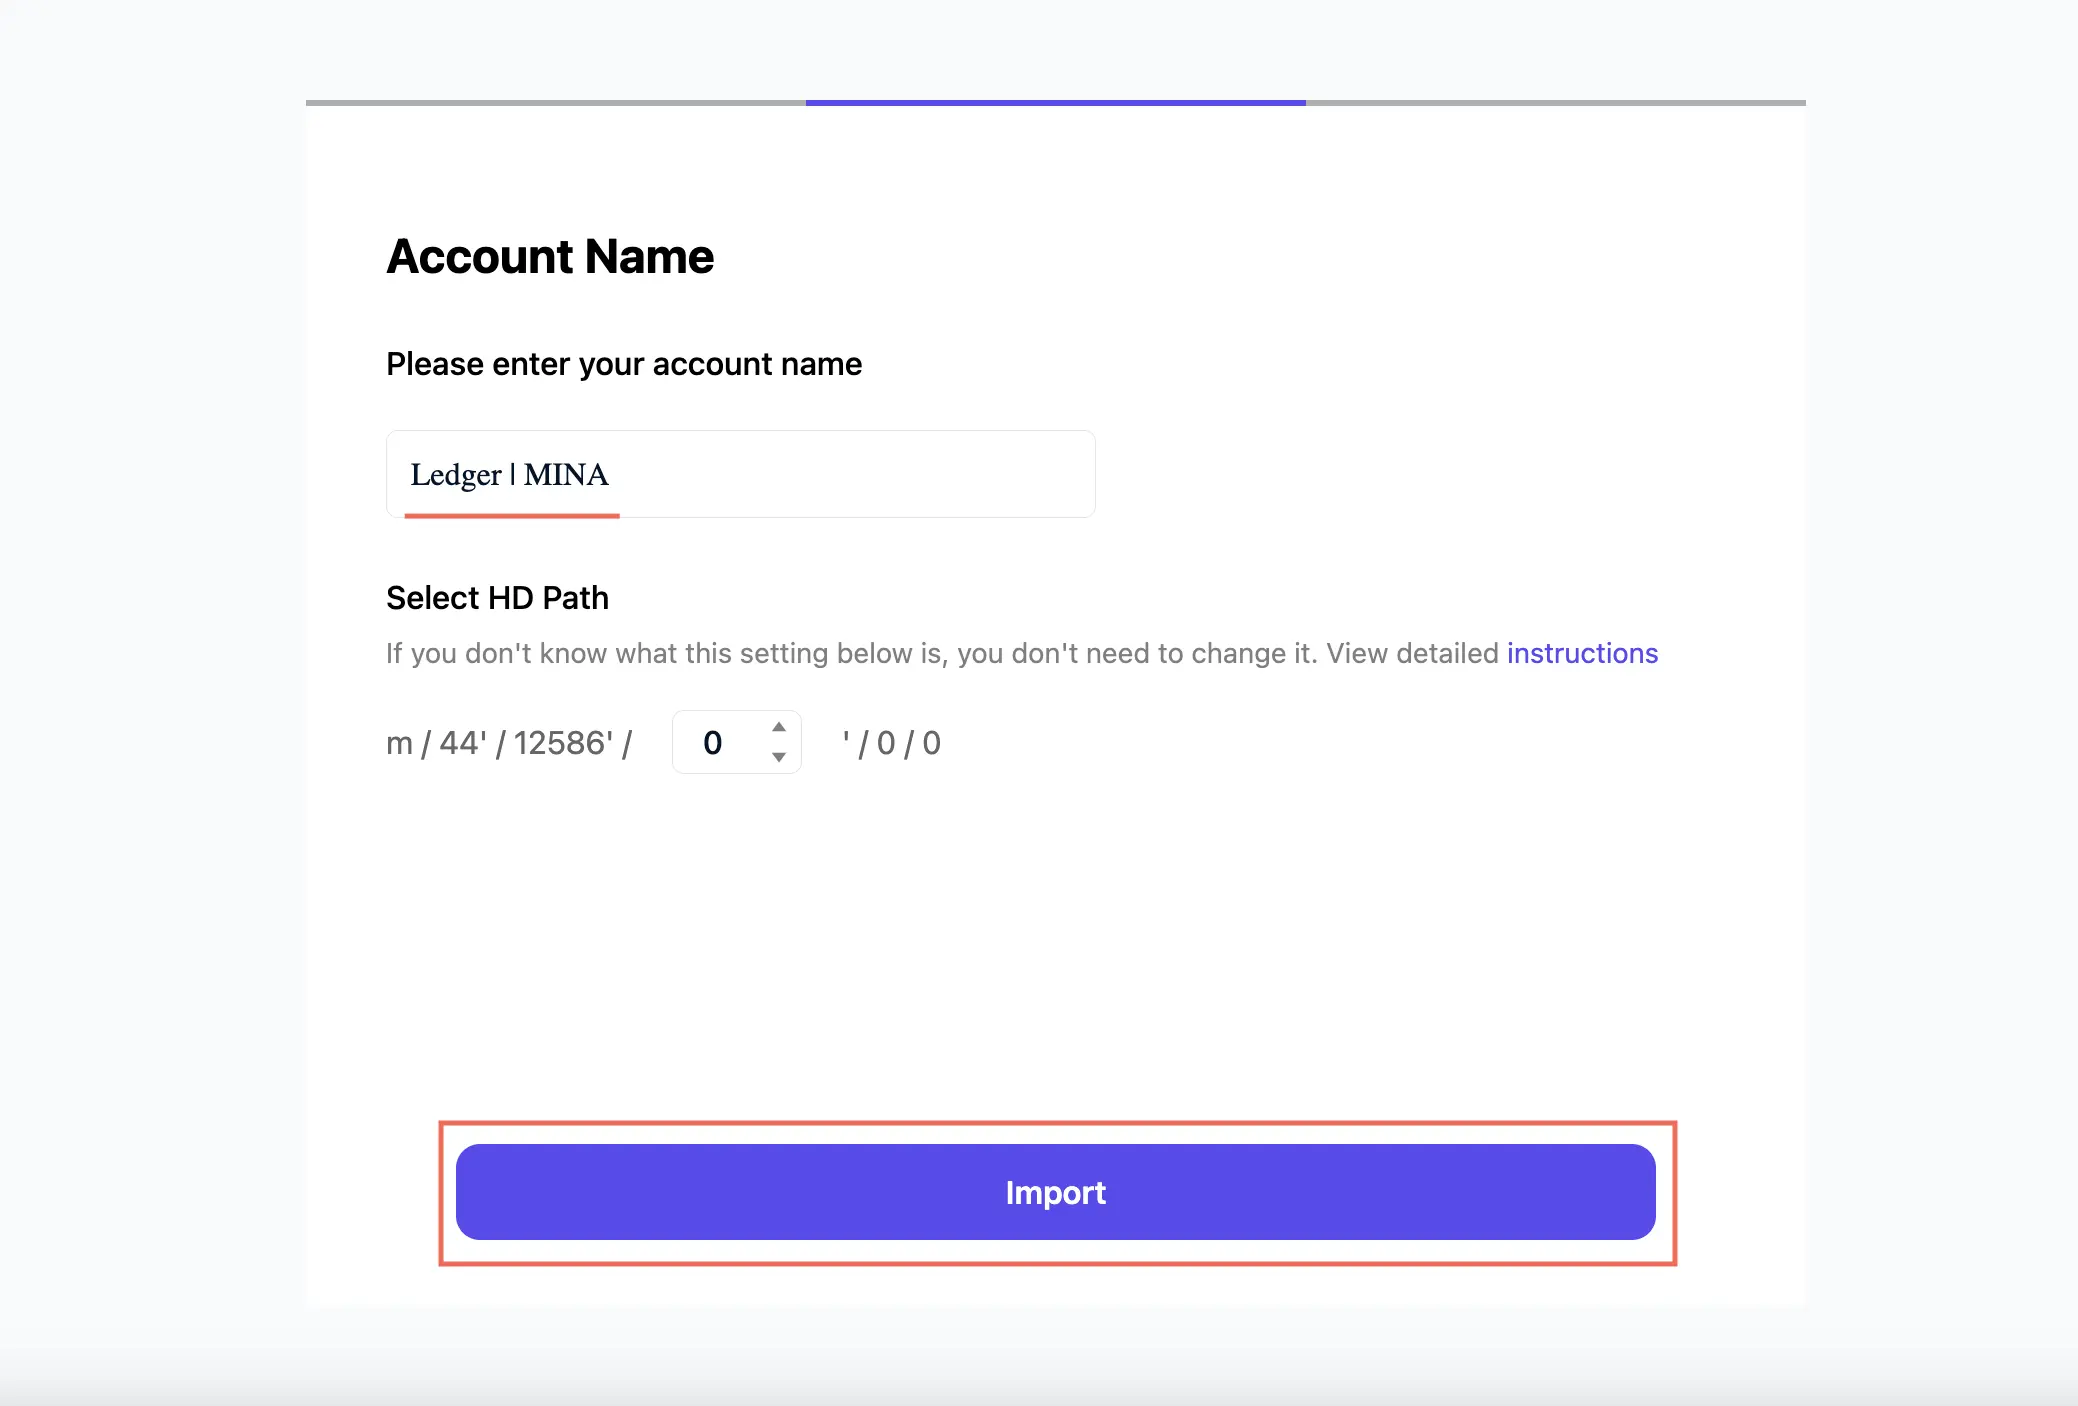 Enter your account name